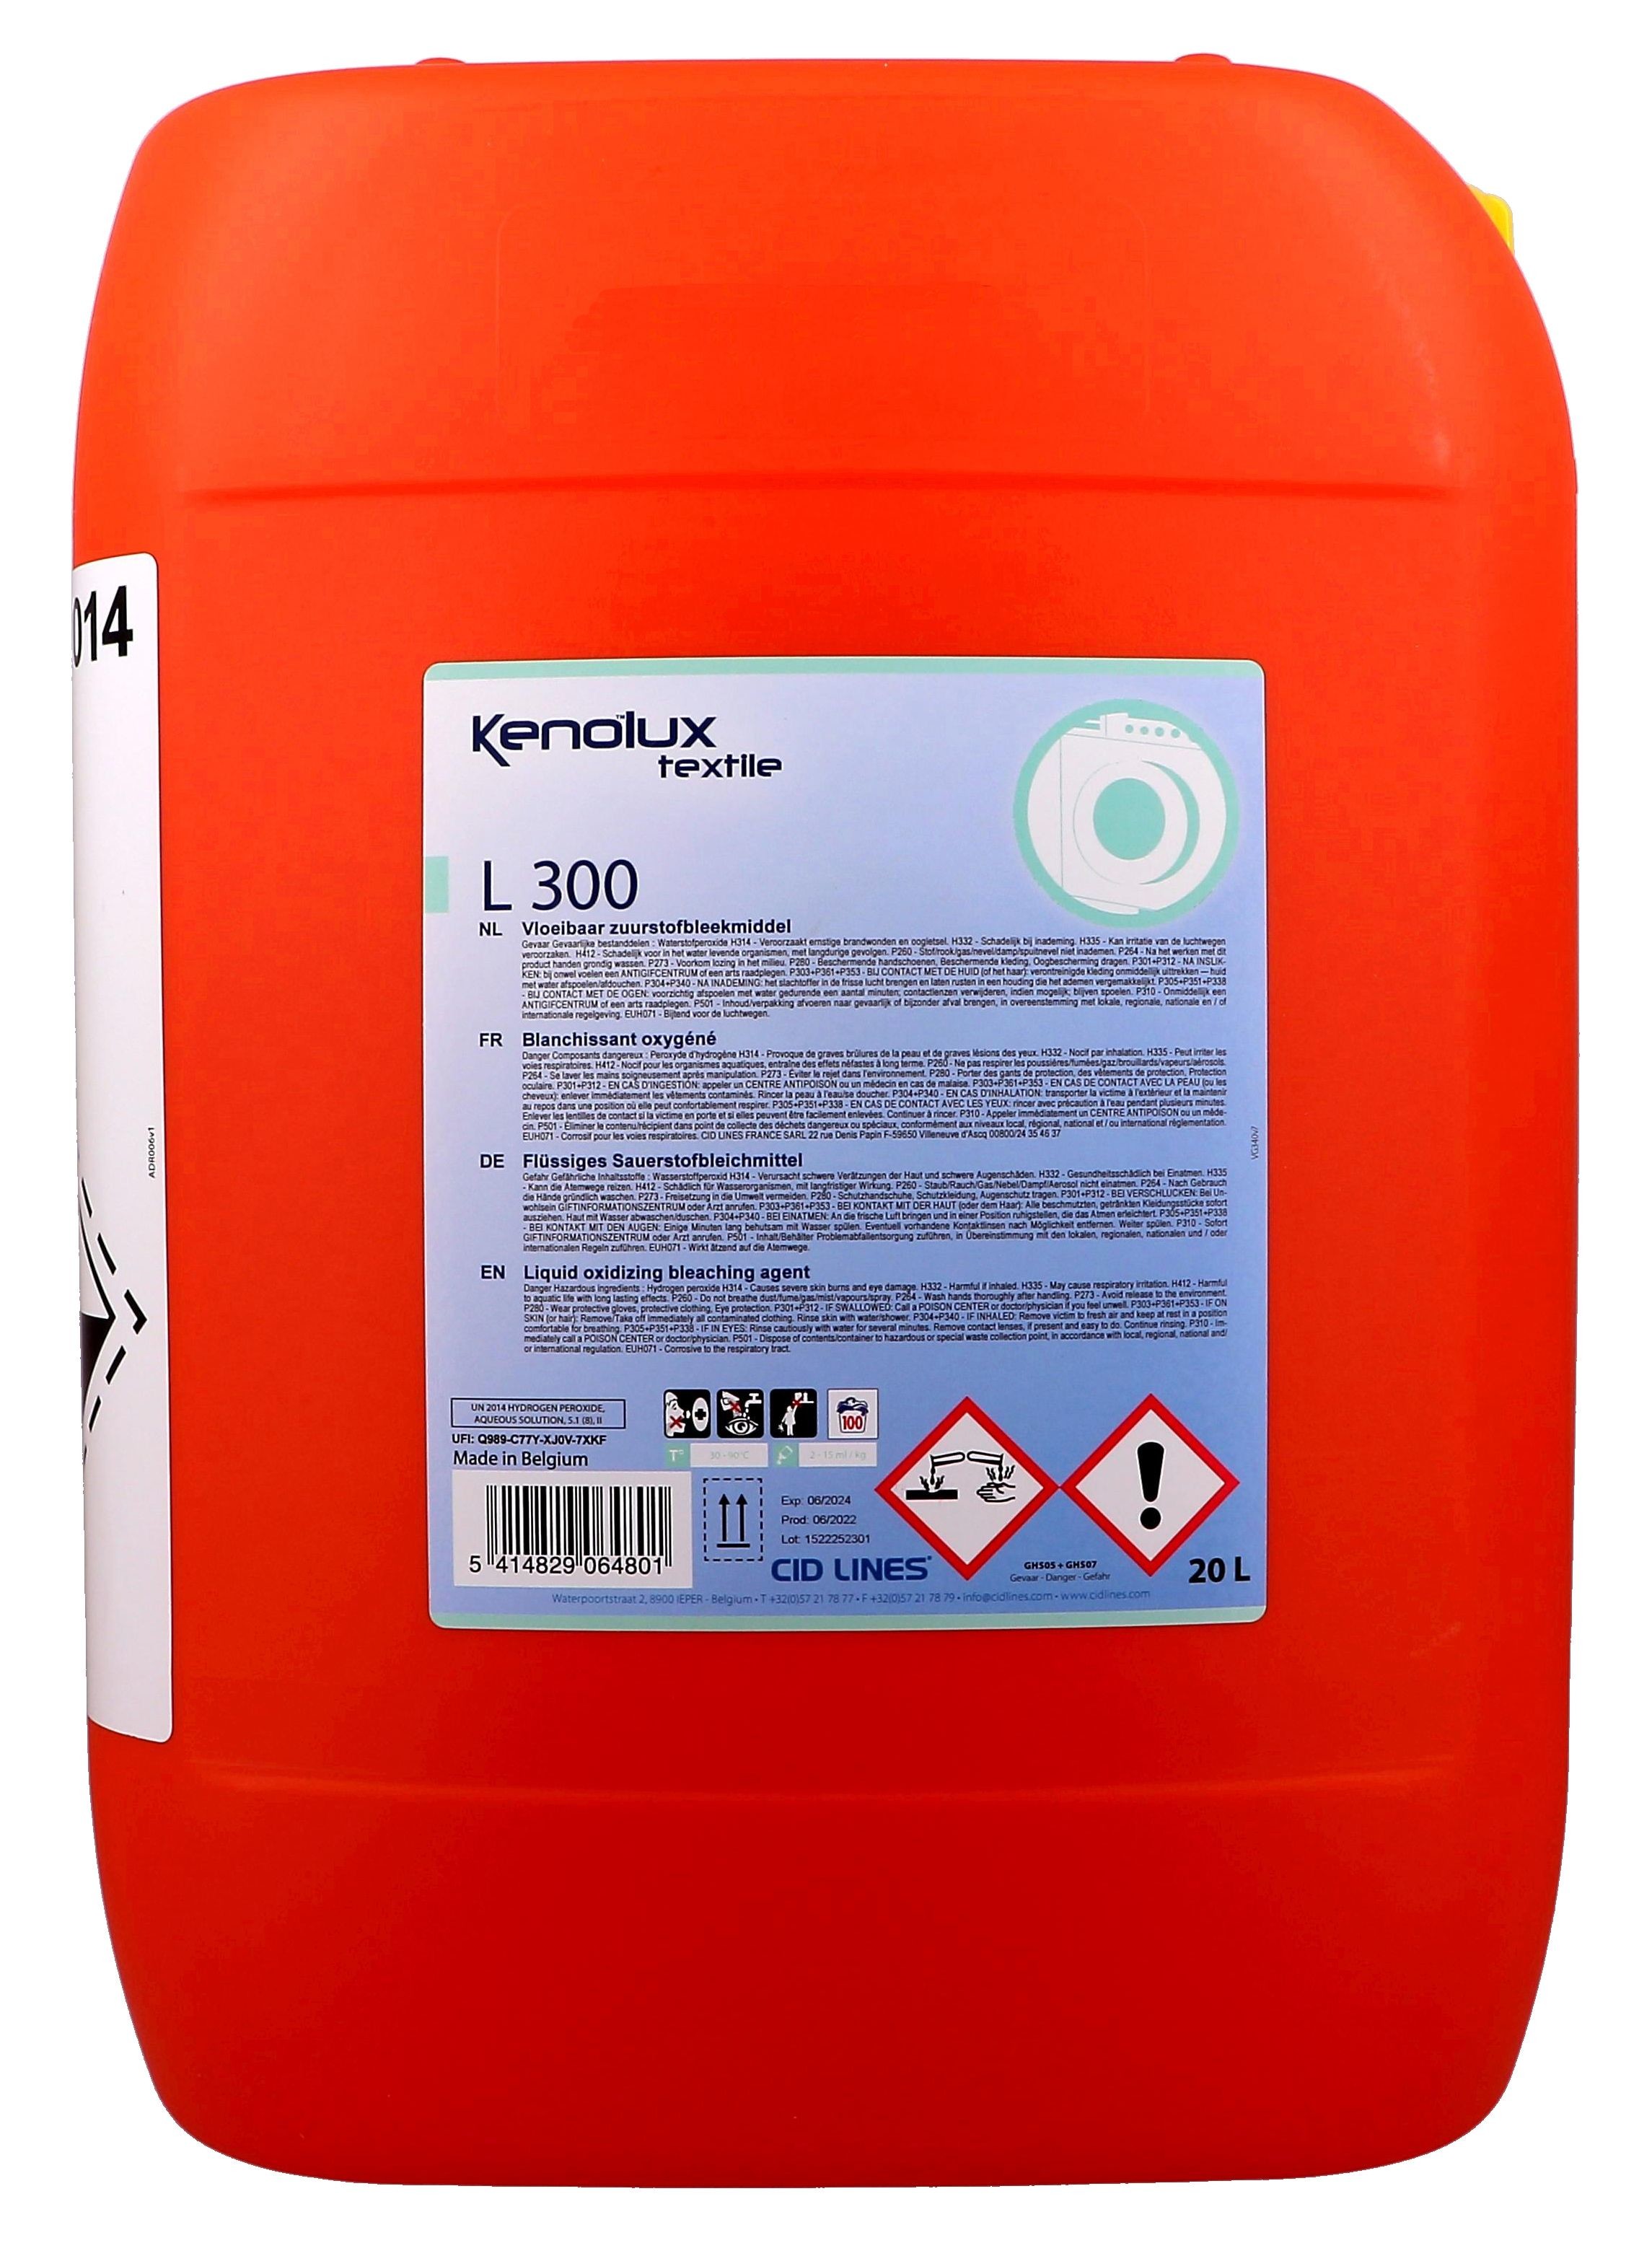 Kenolux Textile L300 Vloeibare Zuurstofbleekmiddel 25kg